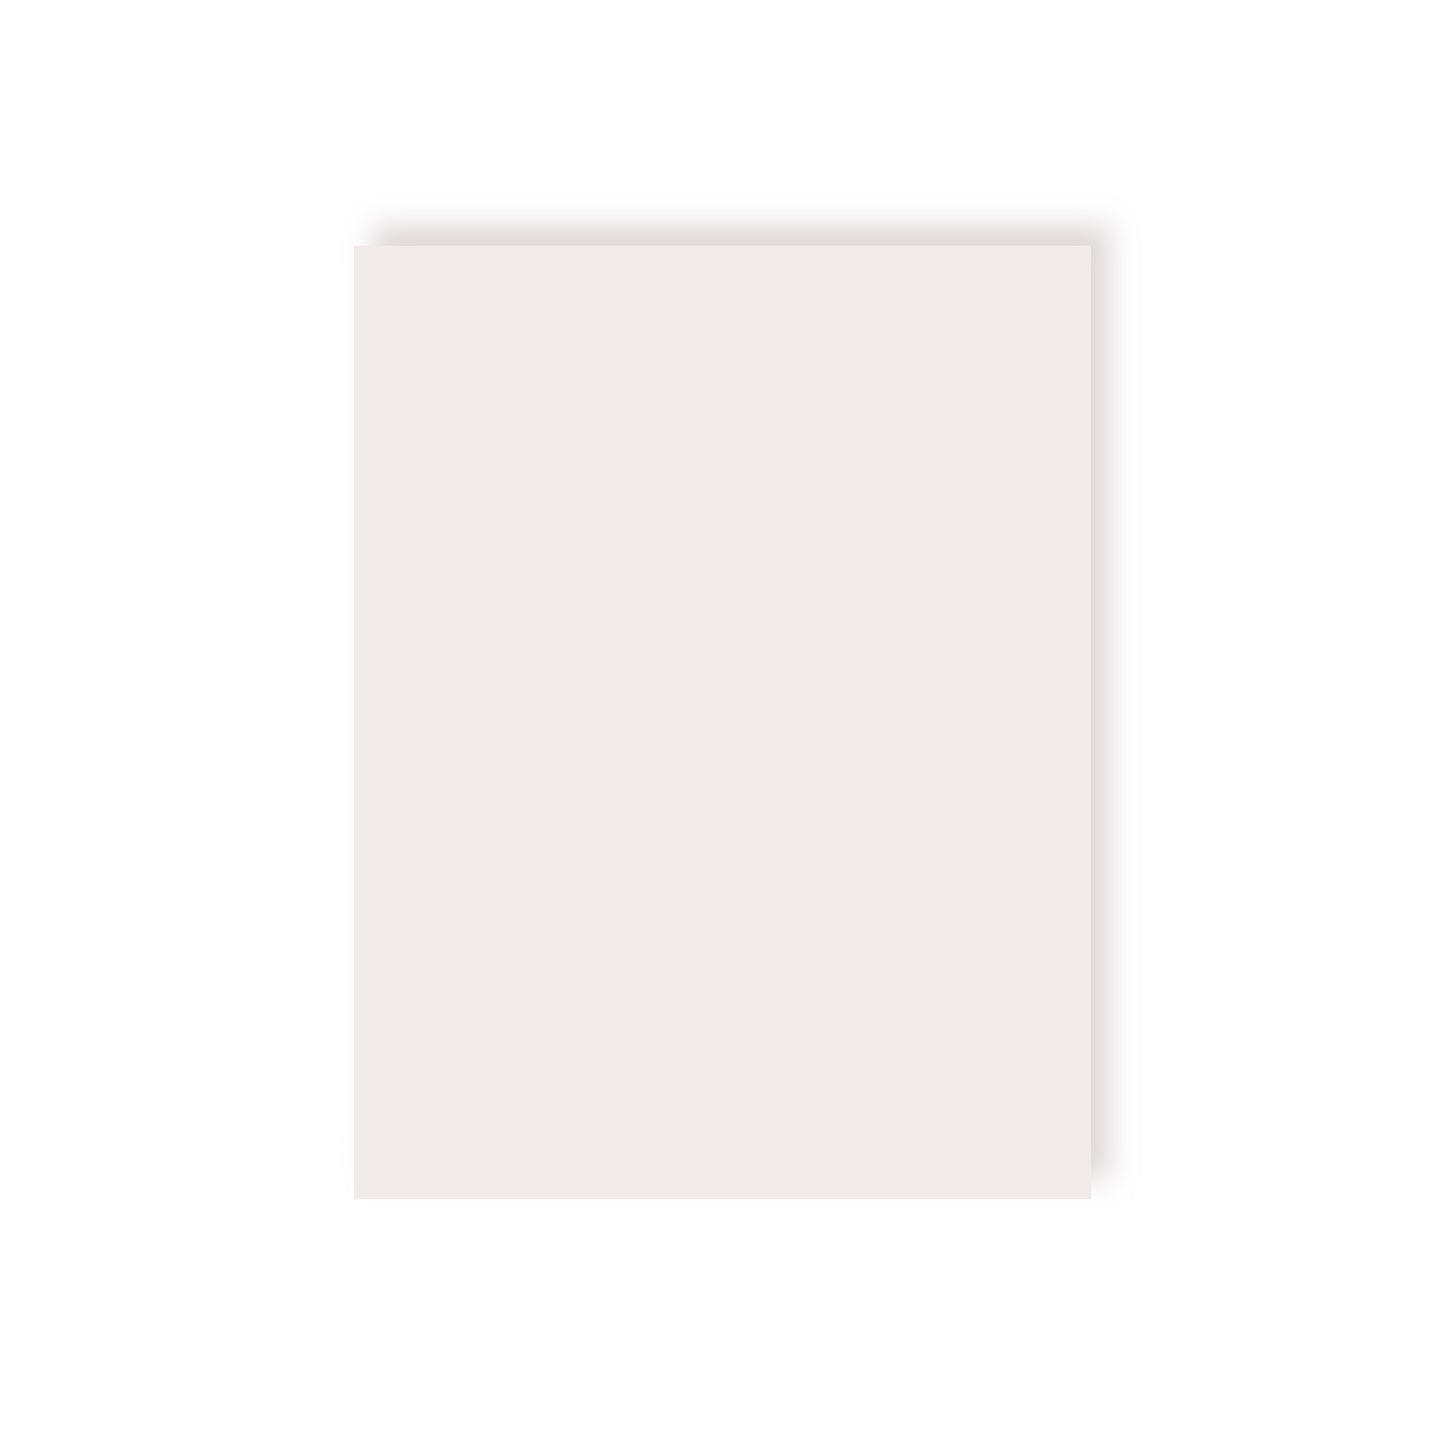 8.5x11 Gloss White Aluminum Sublimation Blanks - 10pcs